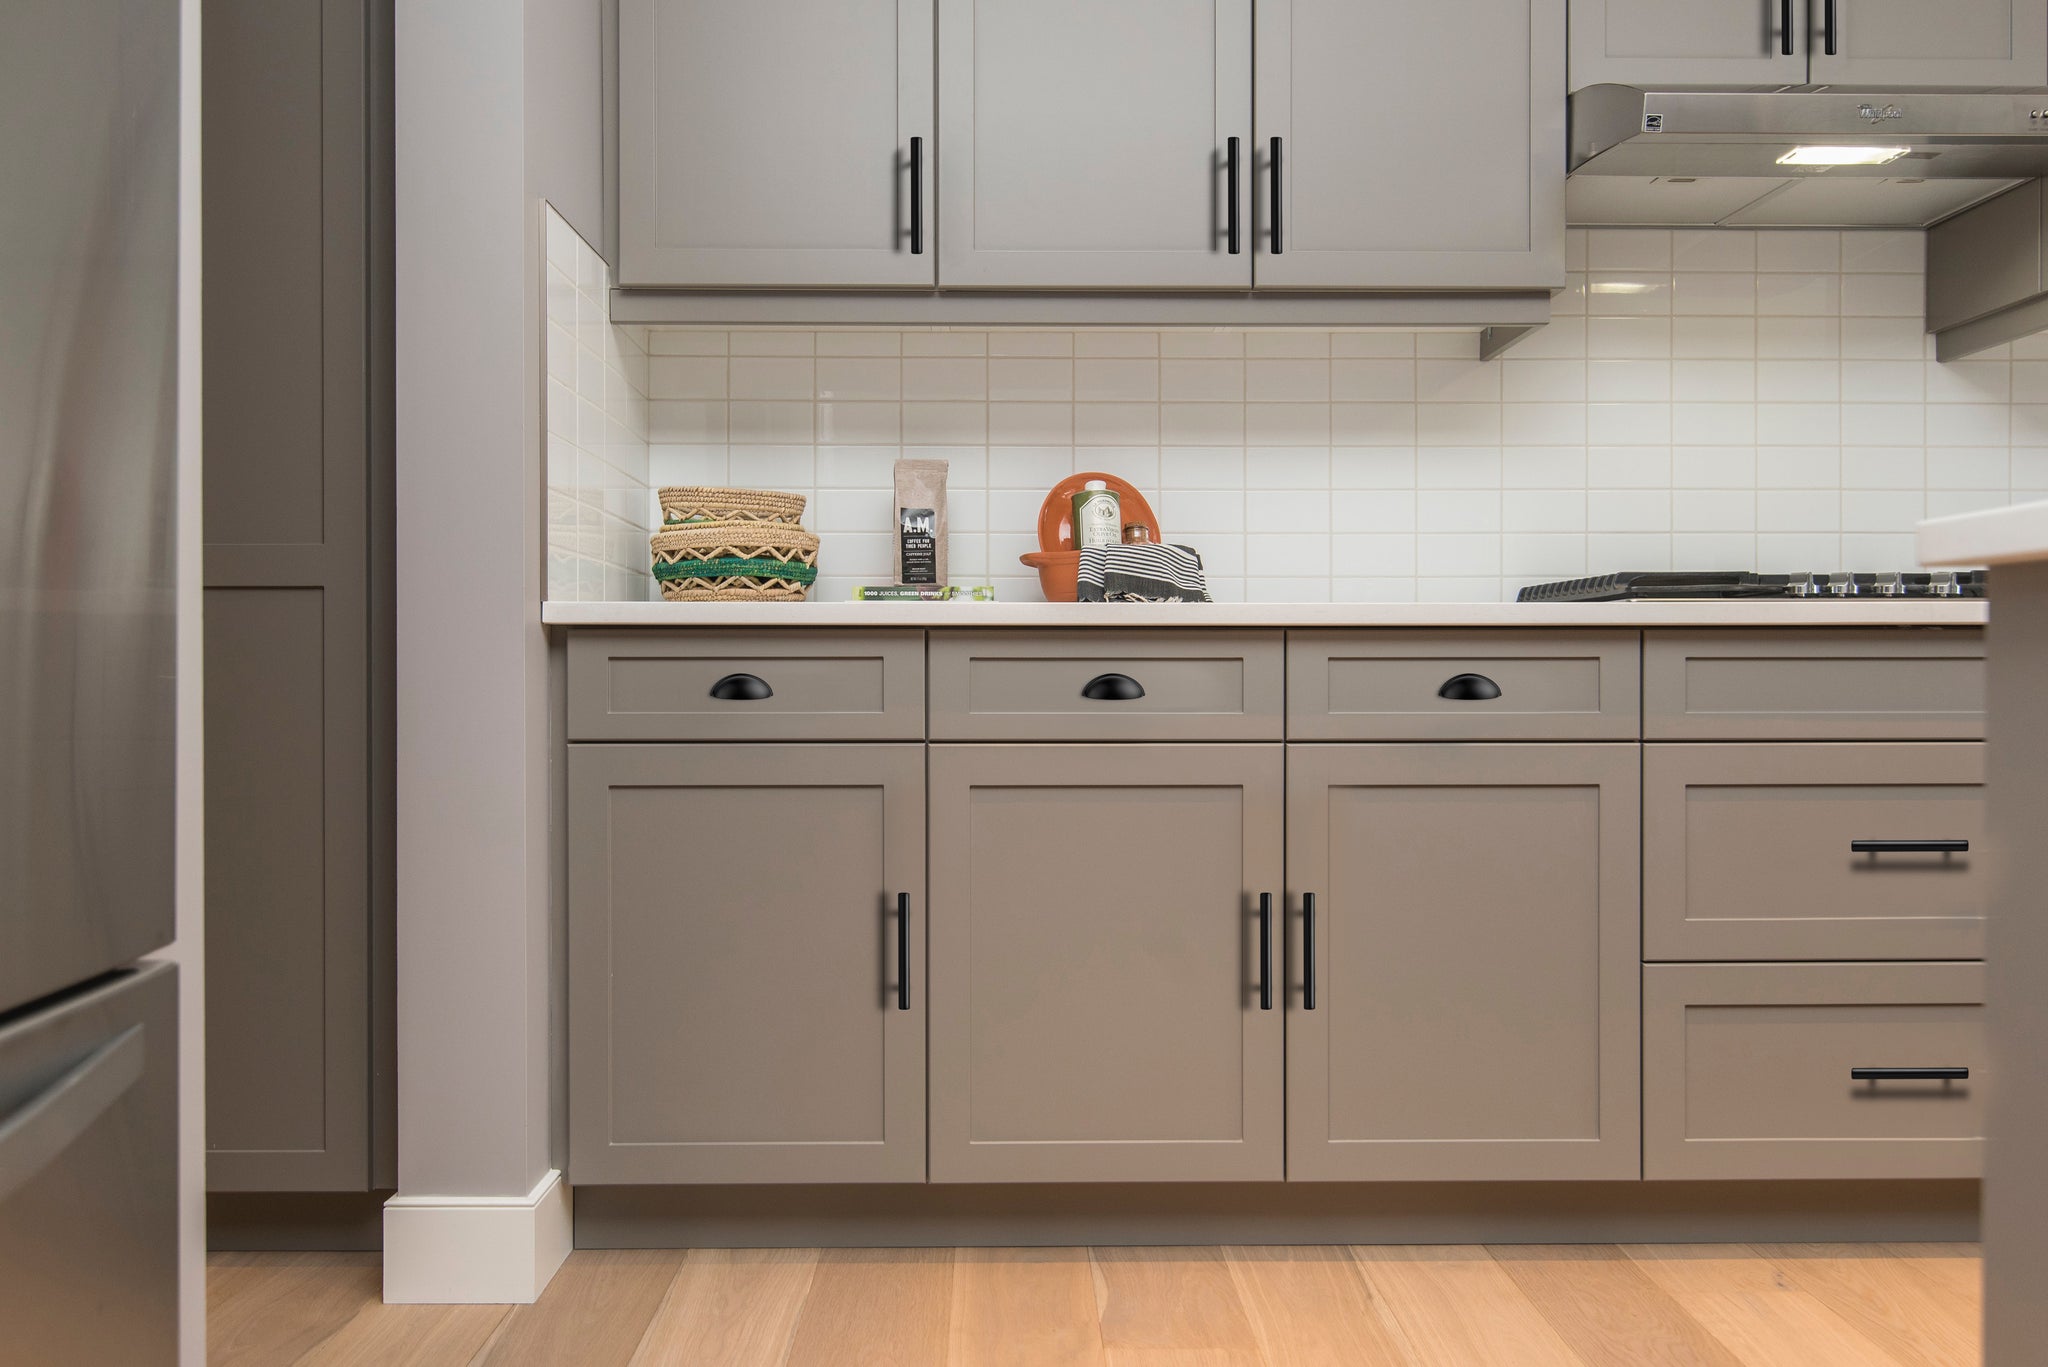 BLACK Cabinet Pulls Stainless Steel Kitchen Cupboard Handles Cabinet Handles 10 1024x1024@2x ?v=1577693338